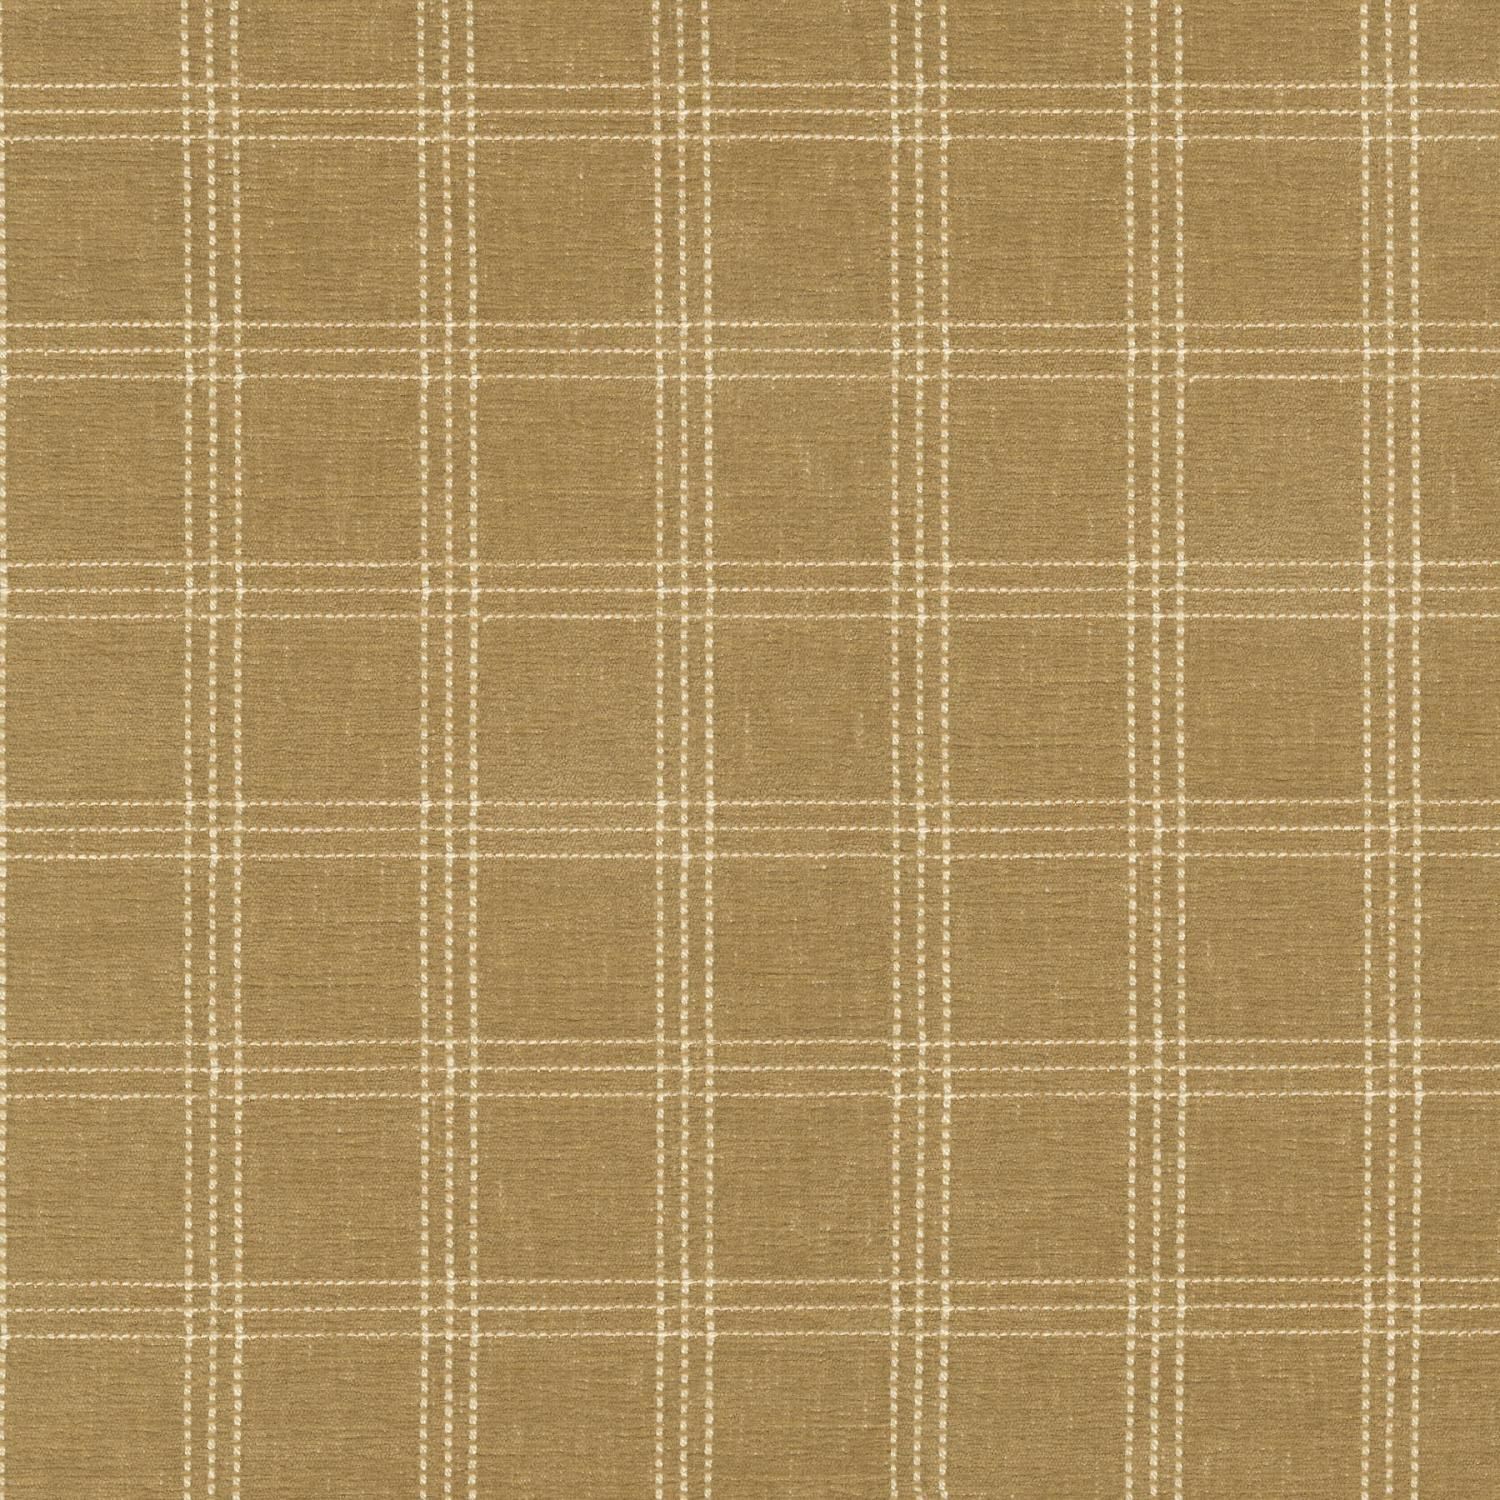 Pk-Vatal/Camel – Fabric